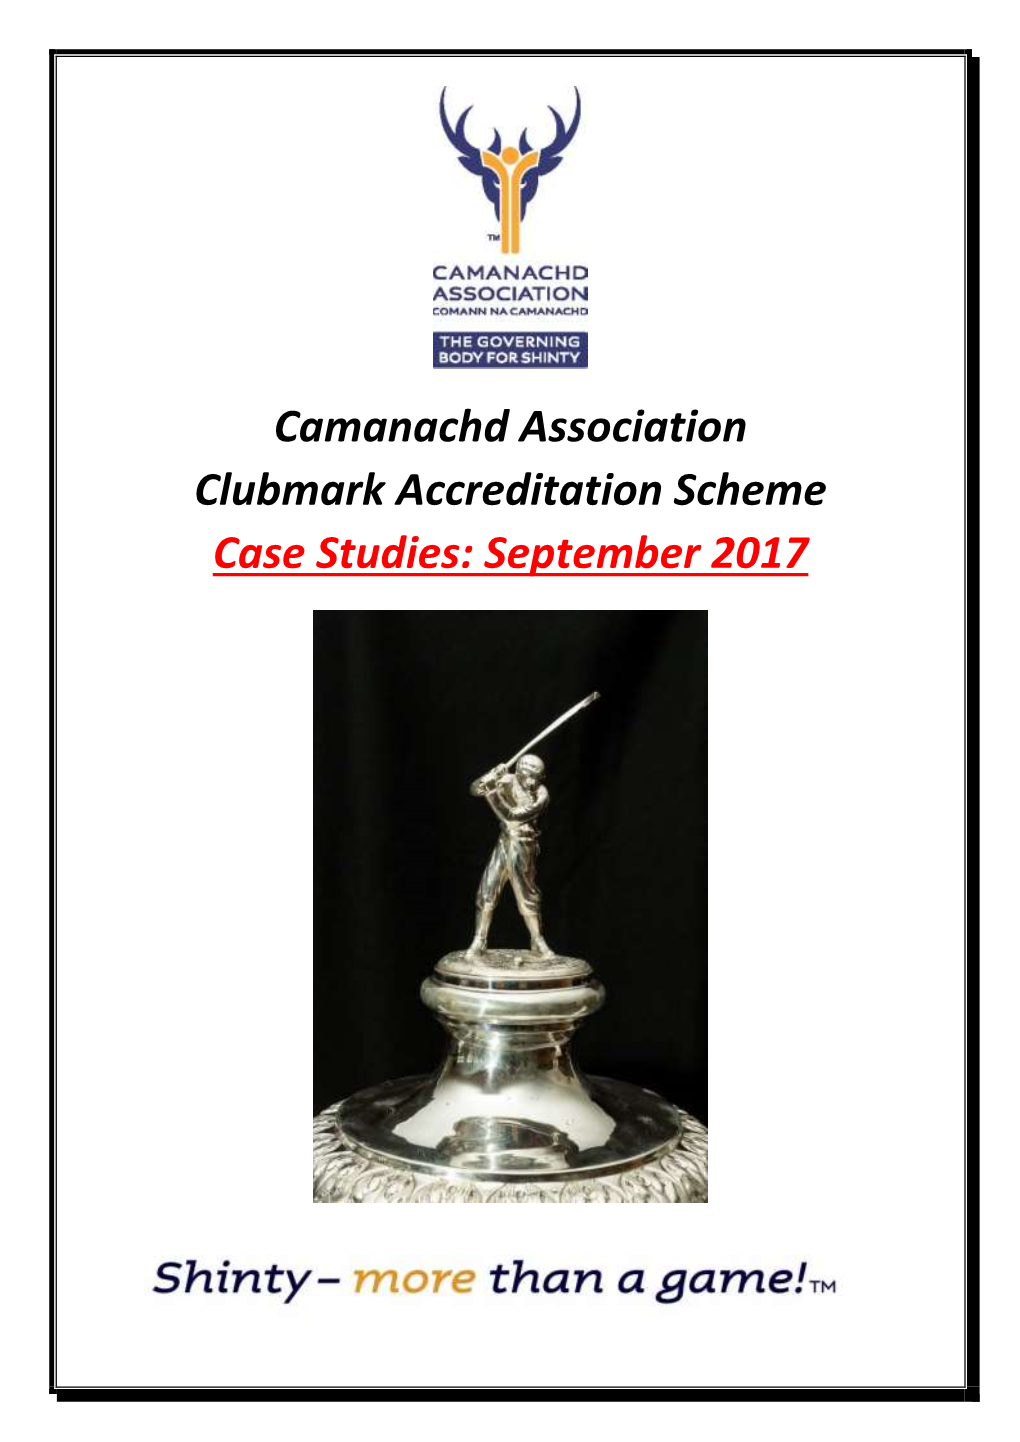 Camanachd Association Clubmark Accreditation Scheme Case Studies: September 2017